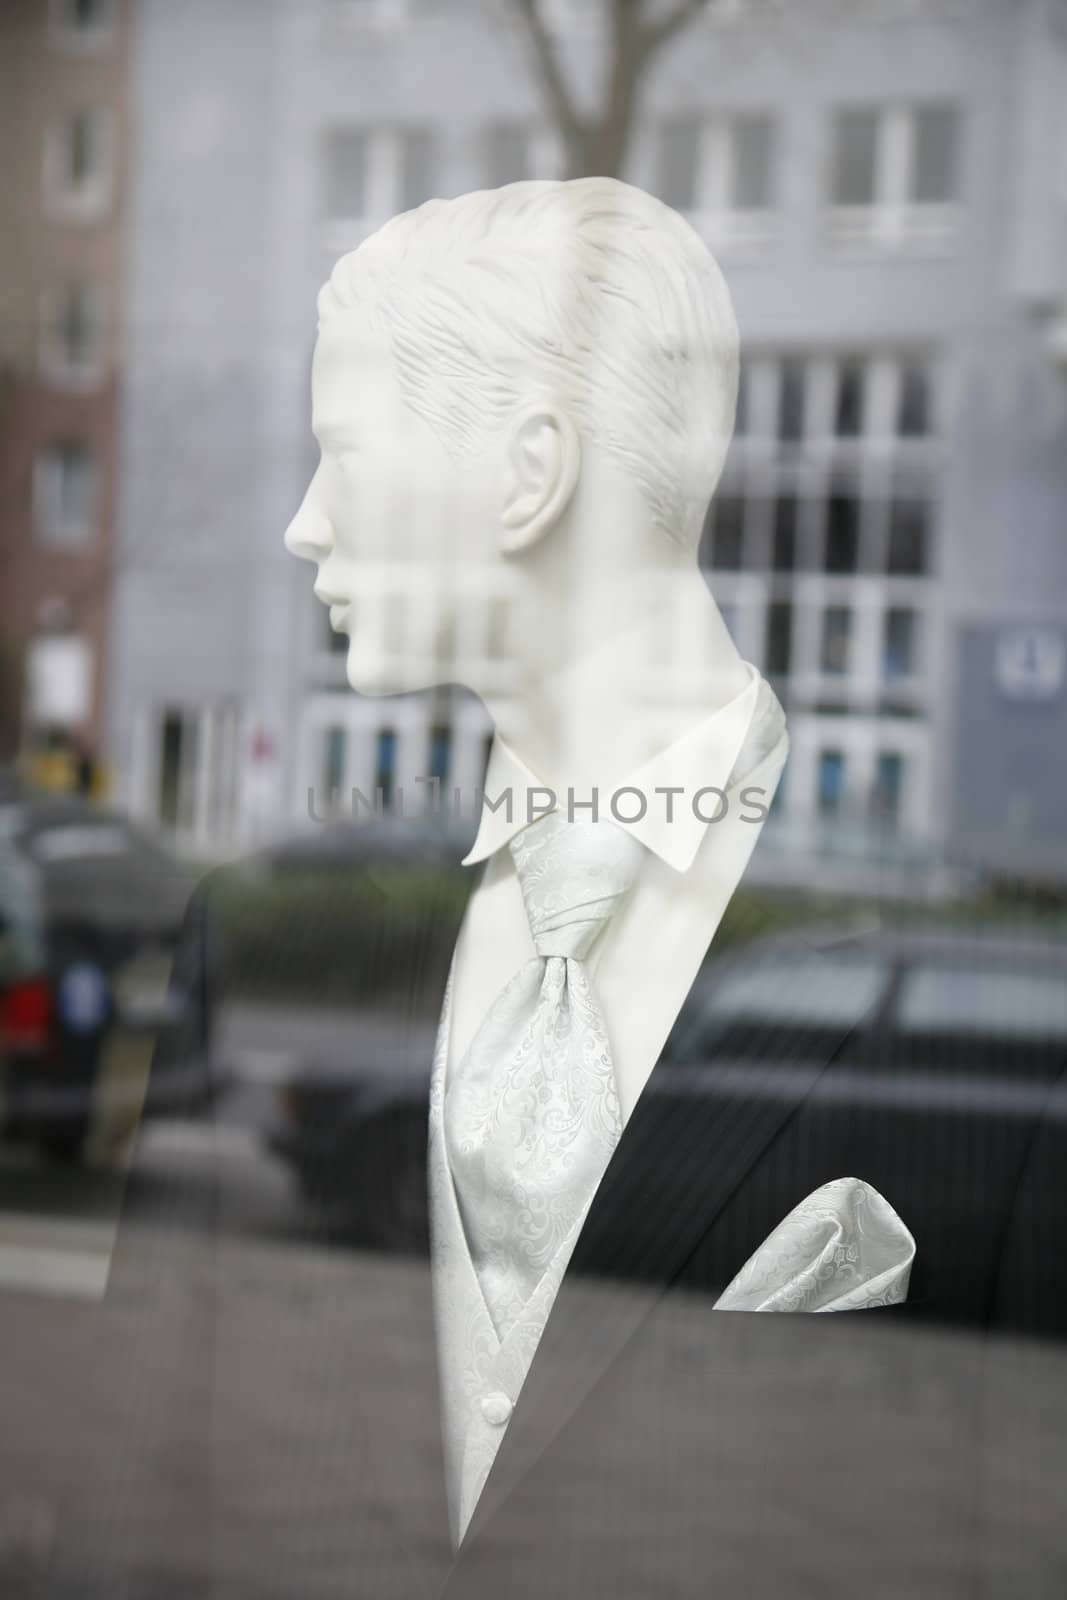 Gentleman fashion seen through a store window - Berlin , Germany